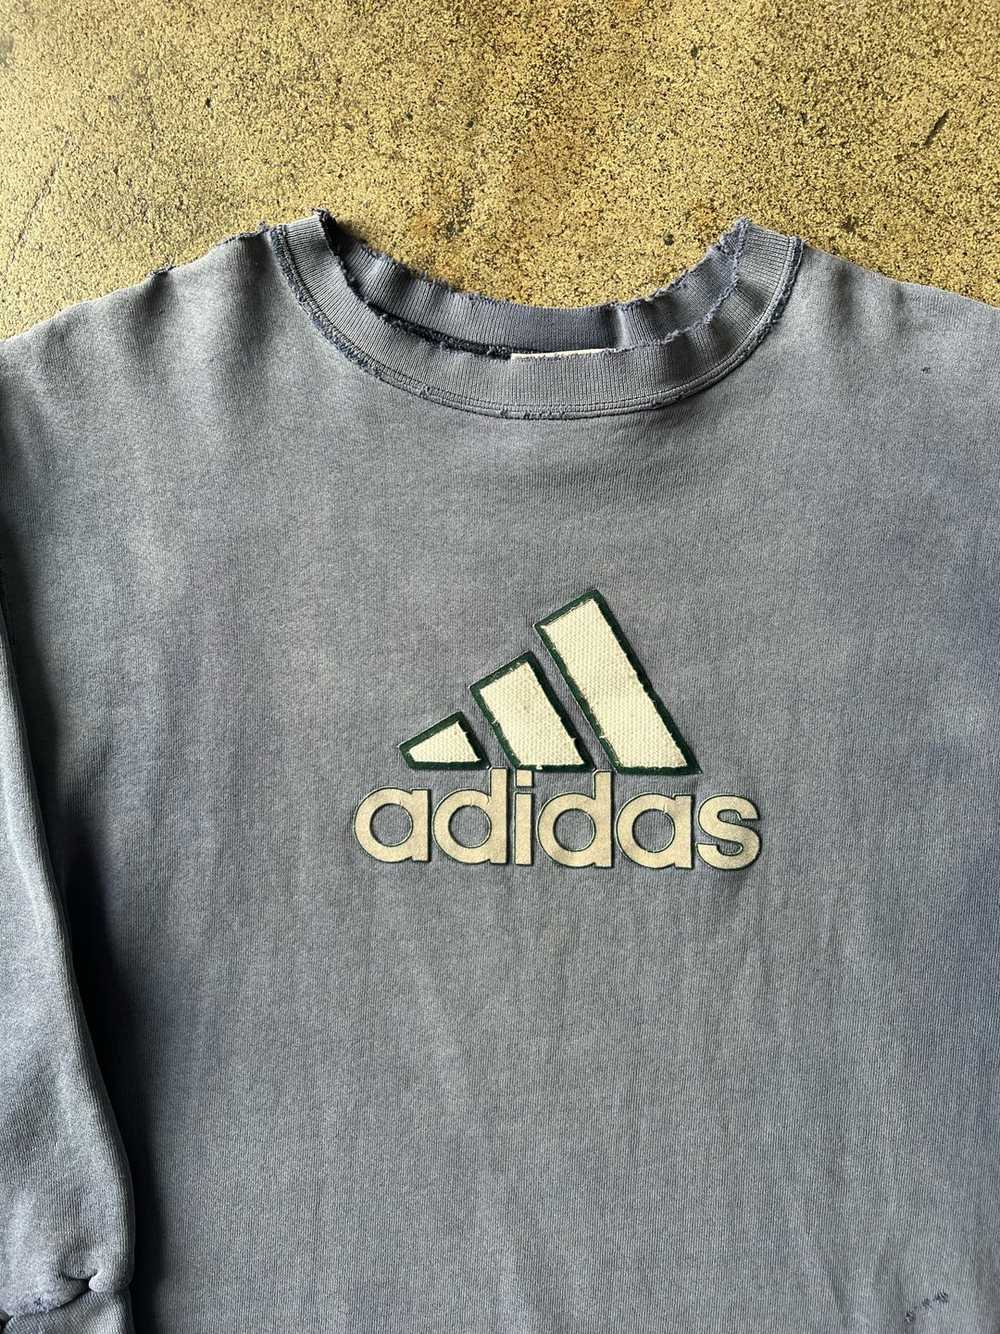 1990s Adidas Sun Faded Blue Crewneck Sweatshirt - image 2